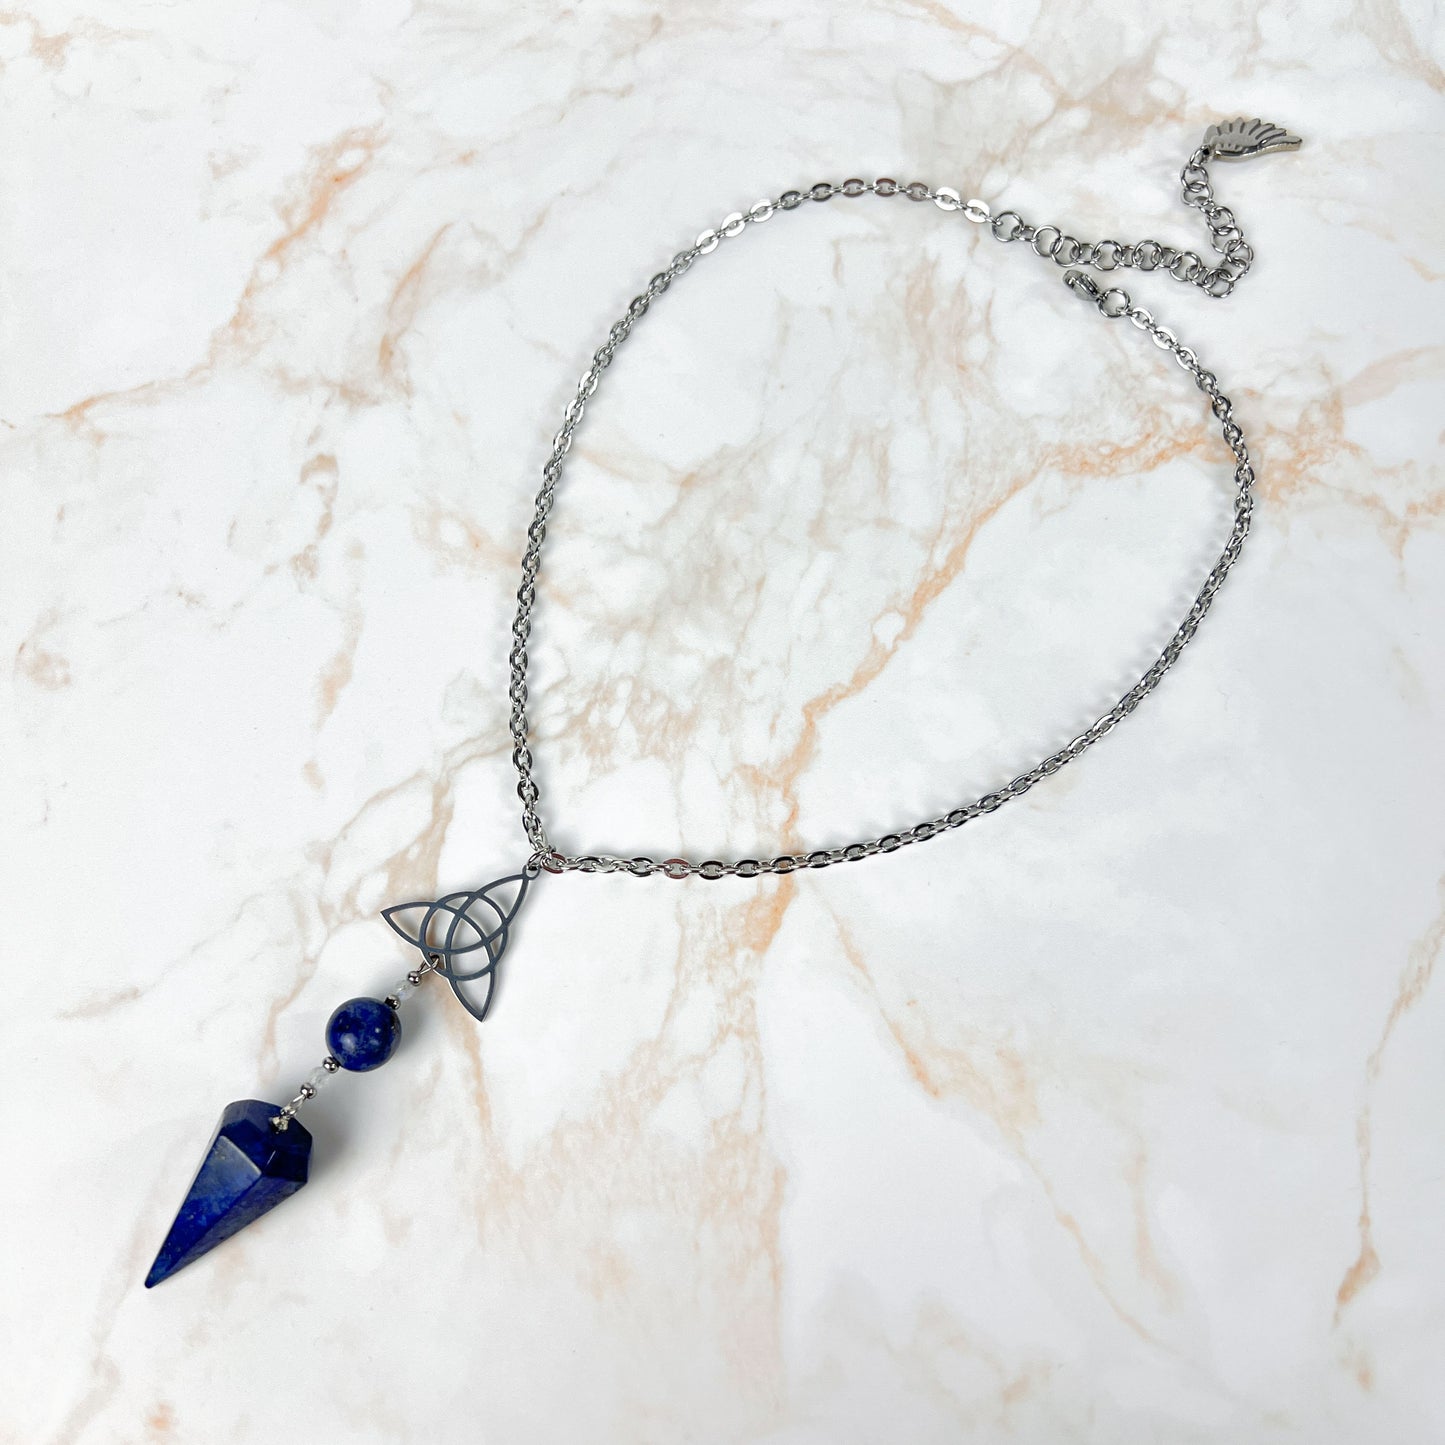 Lapis lazuli, Moonstone and triquetra Celtic knot pendulum necklace, stainless steel Baguette Magick